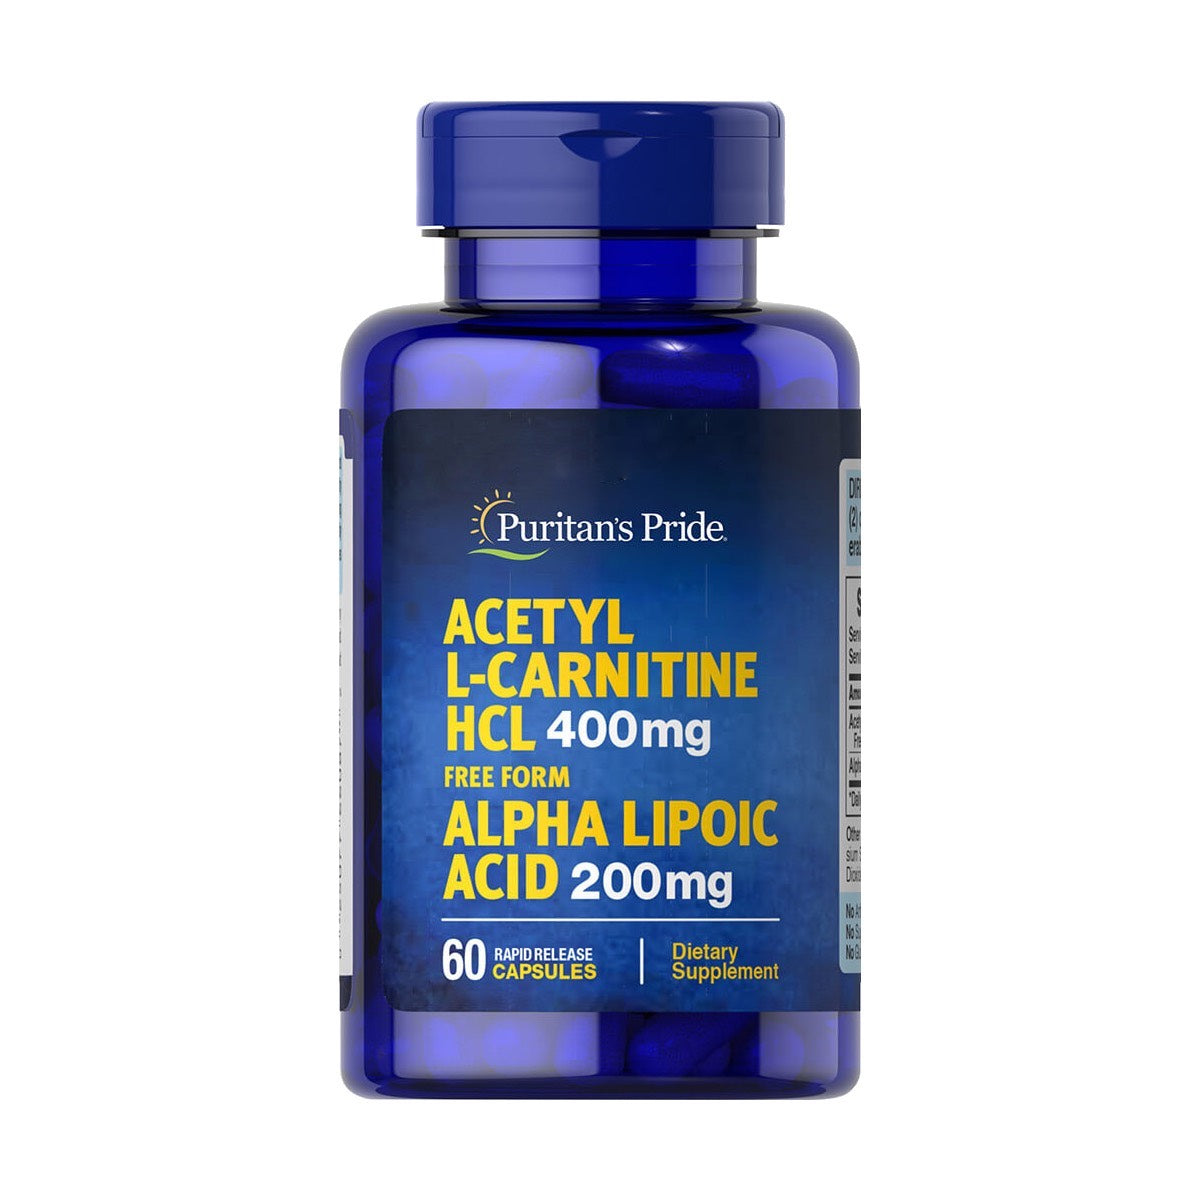 Puritan's Pride, Acetyl L-Carnitine Free Form 400 mg with Alpha Lipoic Acid 200 mg